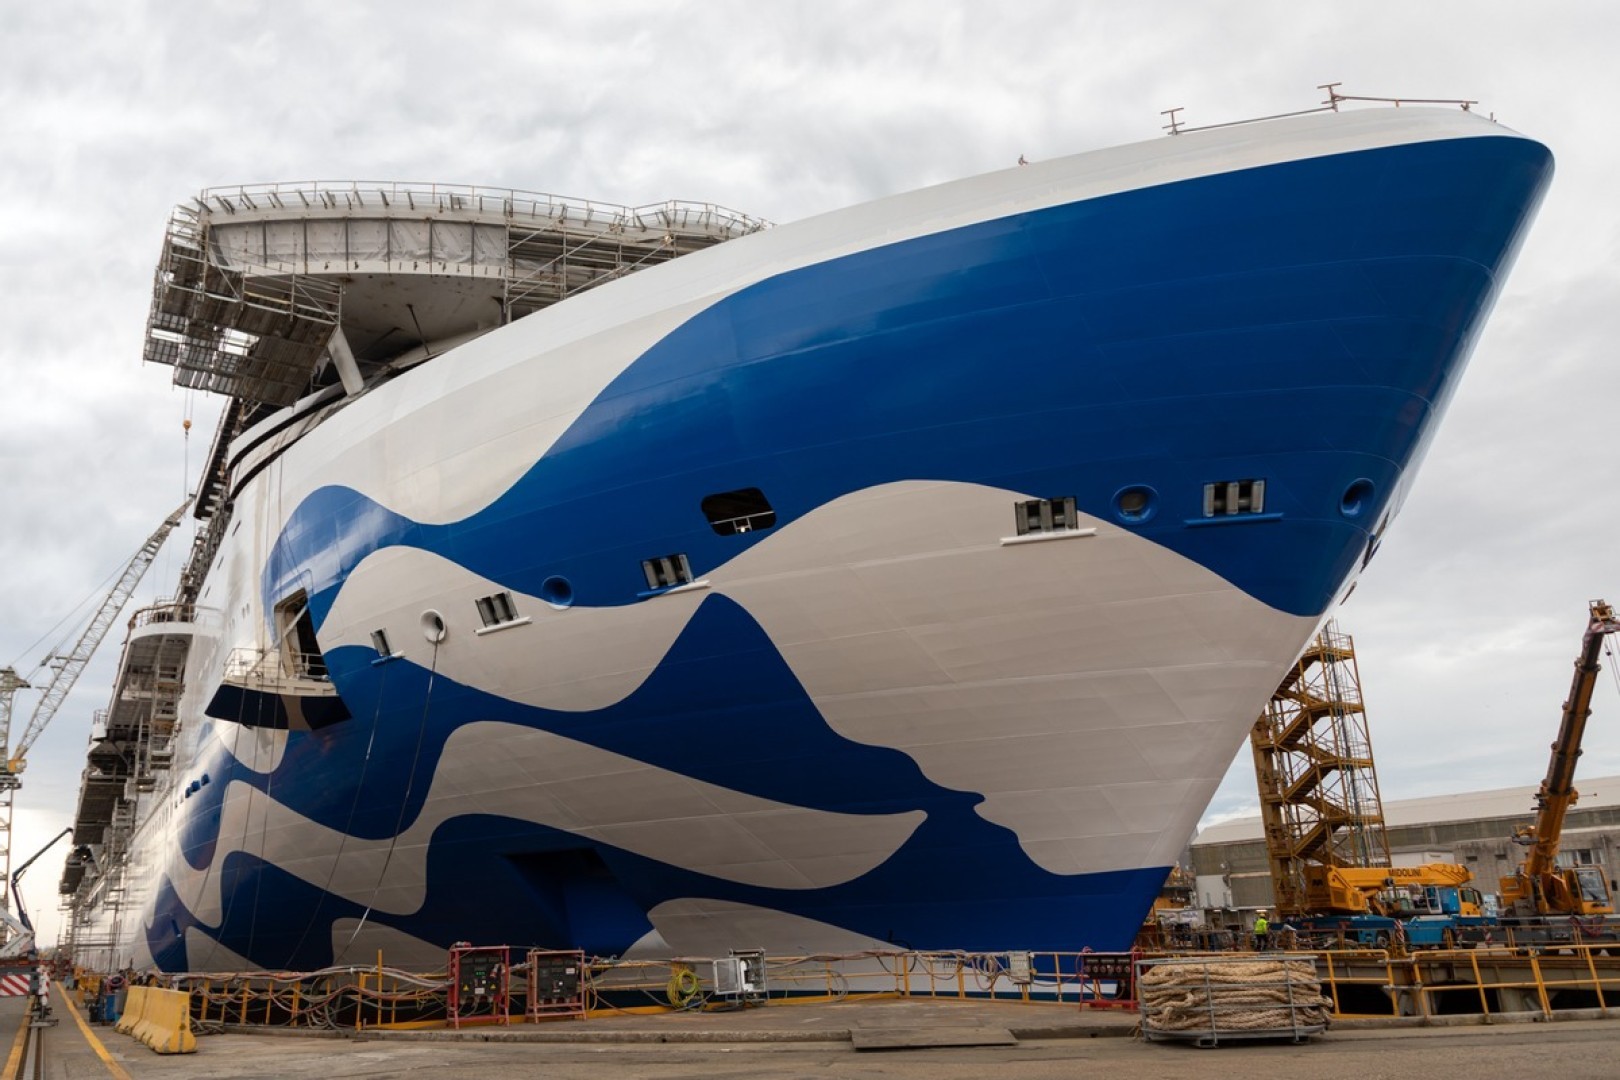 Fincantieri floats out its first LNG cruise ship Sun Princess